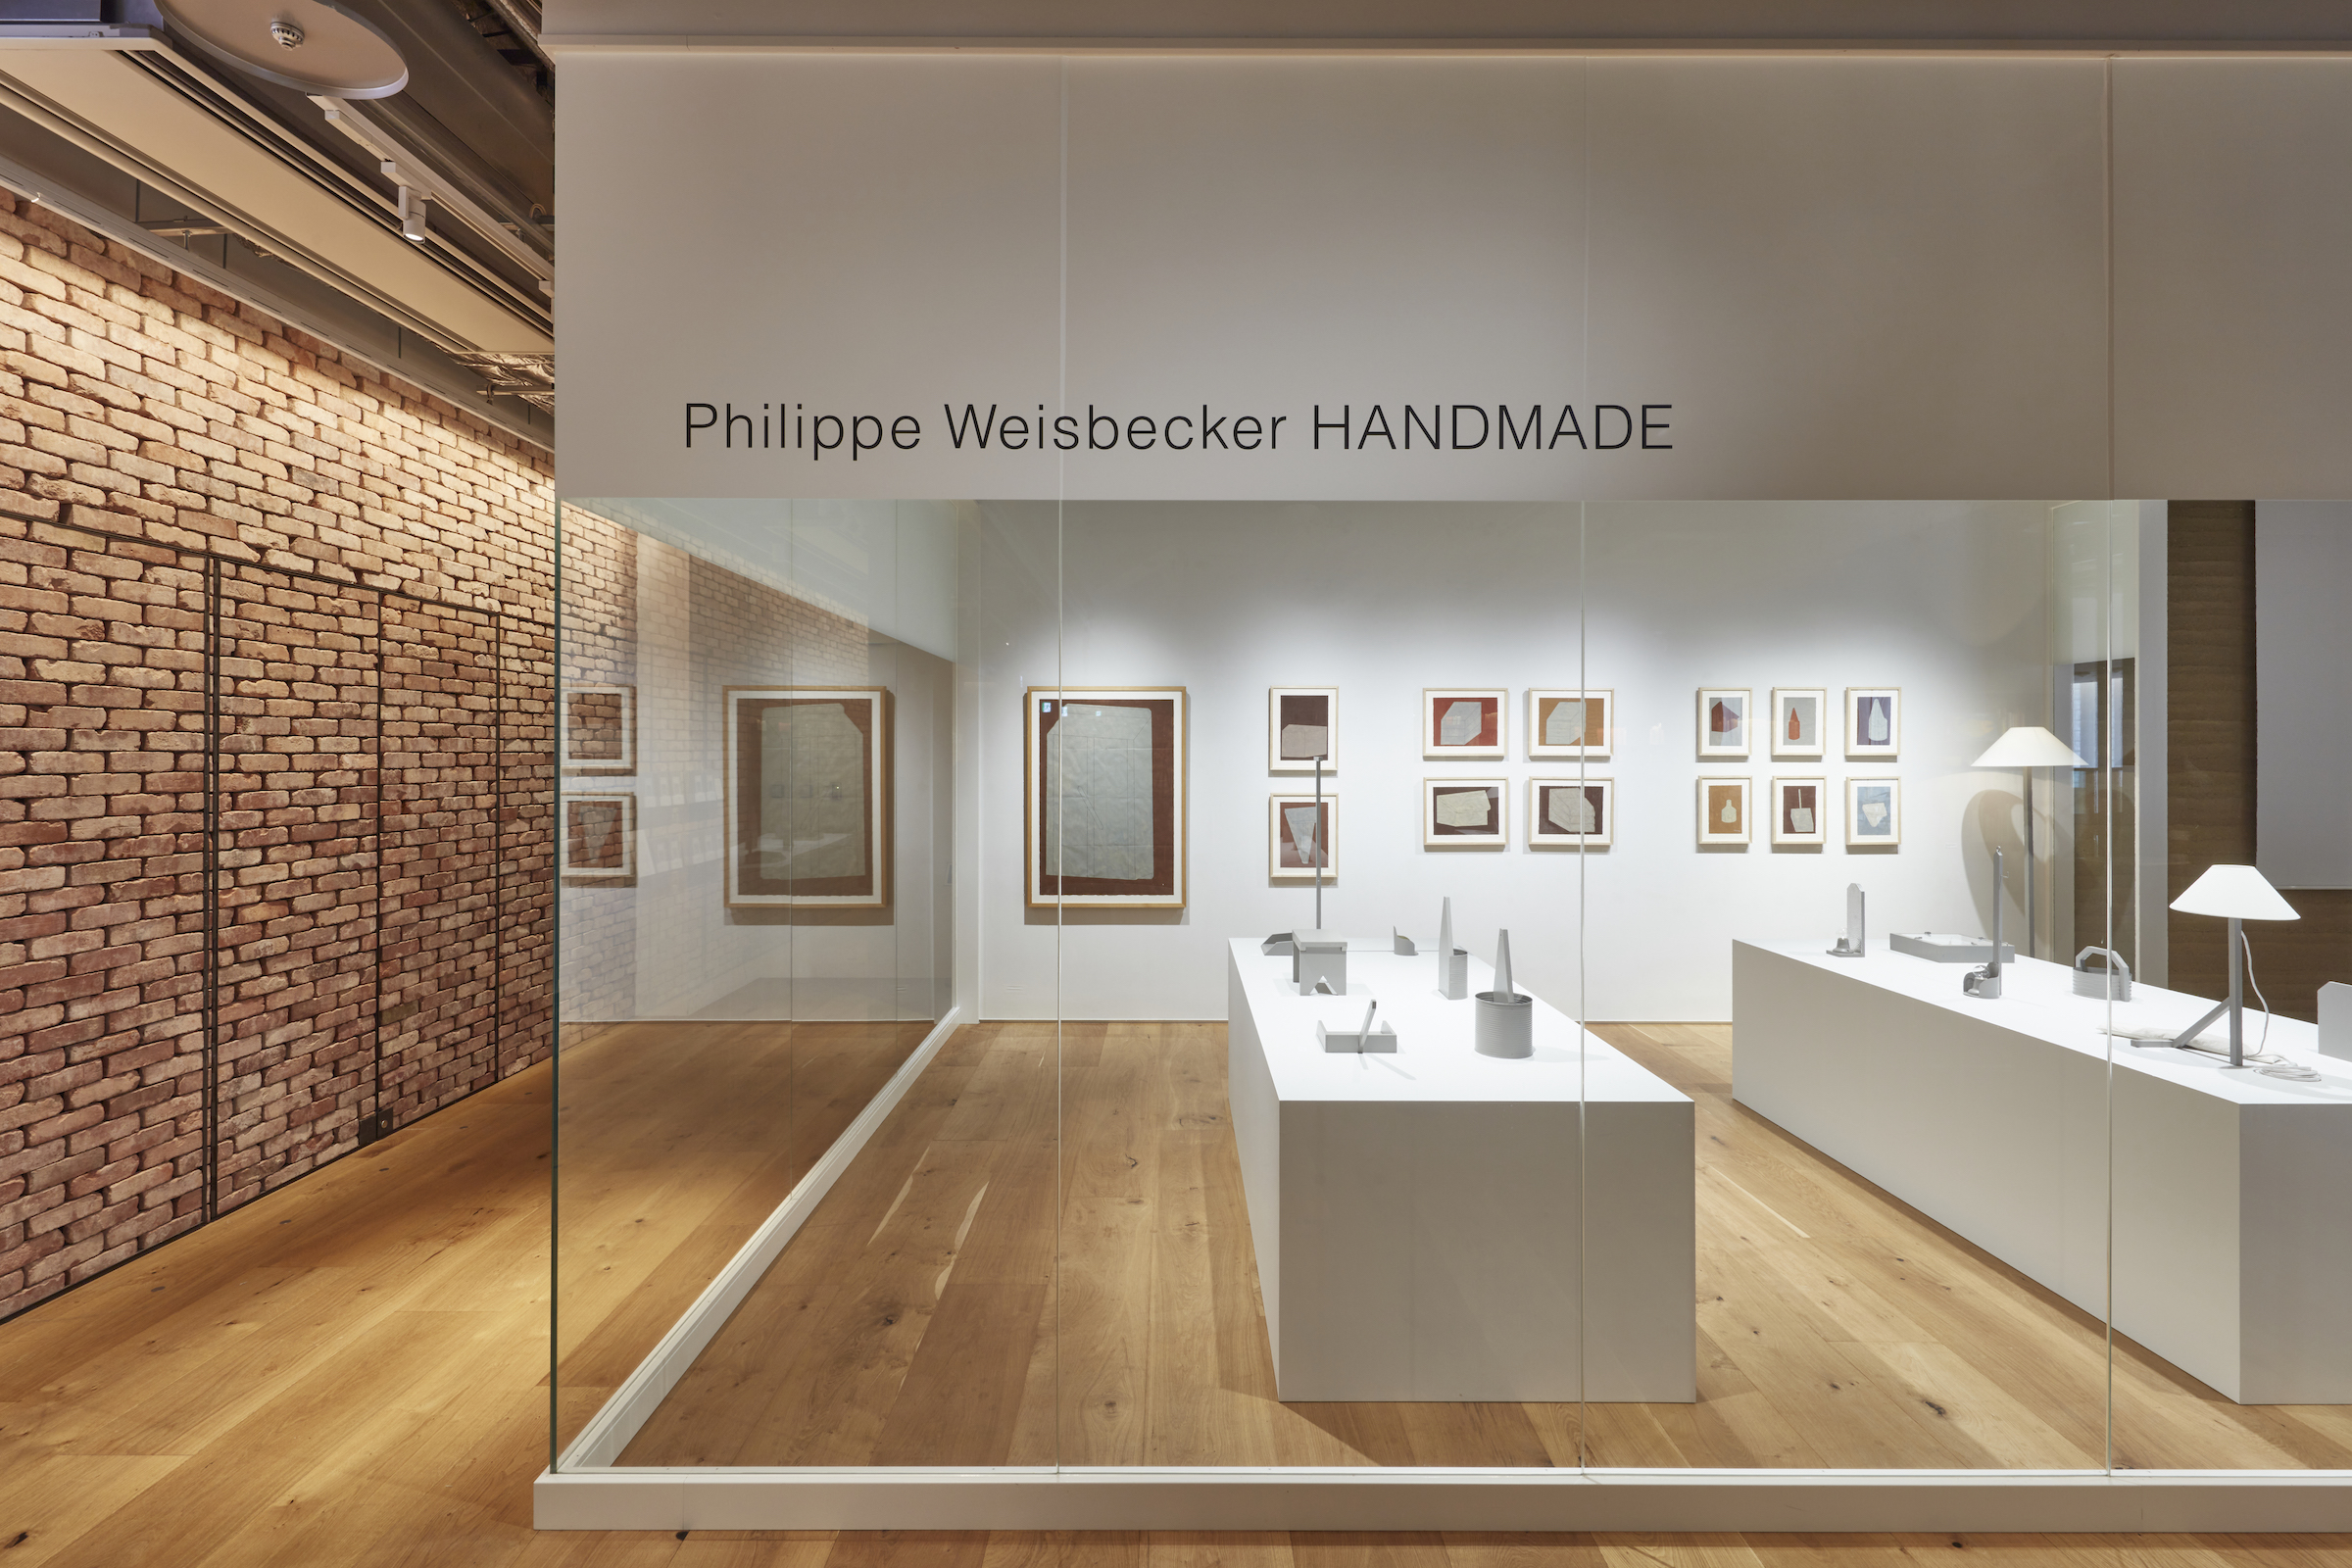 Life in Art : Philippe Weisbecker ‘Handmade’ exhibition